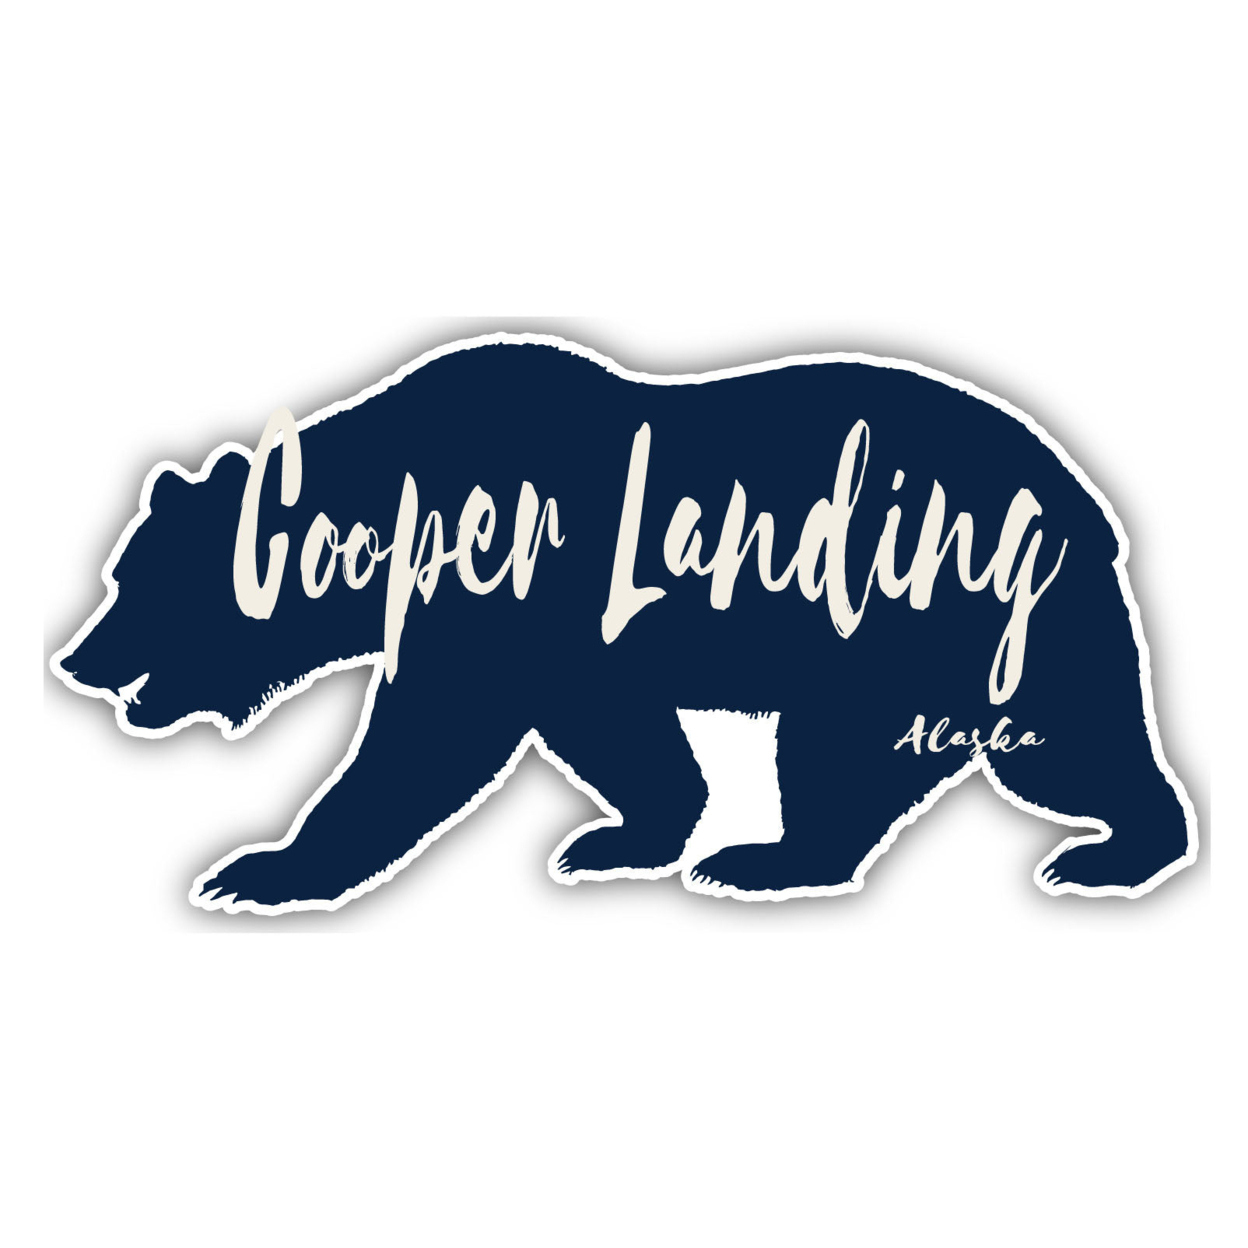 Cooper Landing Alaska Souvenir Decorative Stickers (Choose Theme And Size) - Single Unit, 6-Inch, Tent